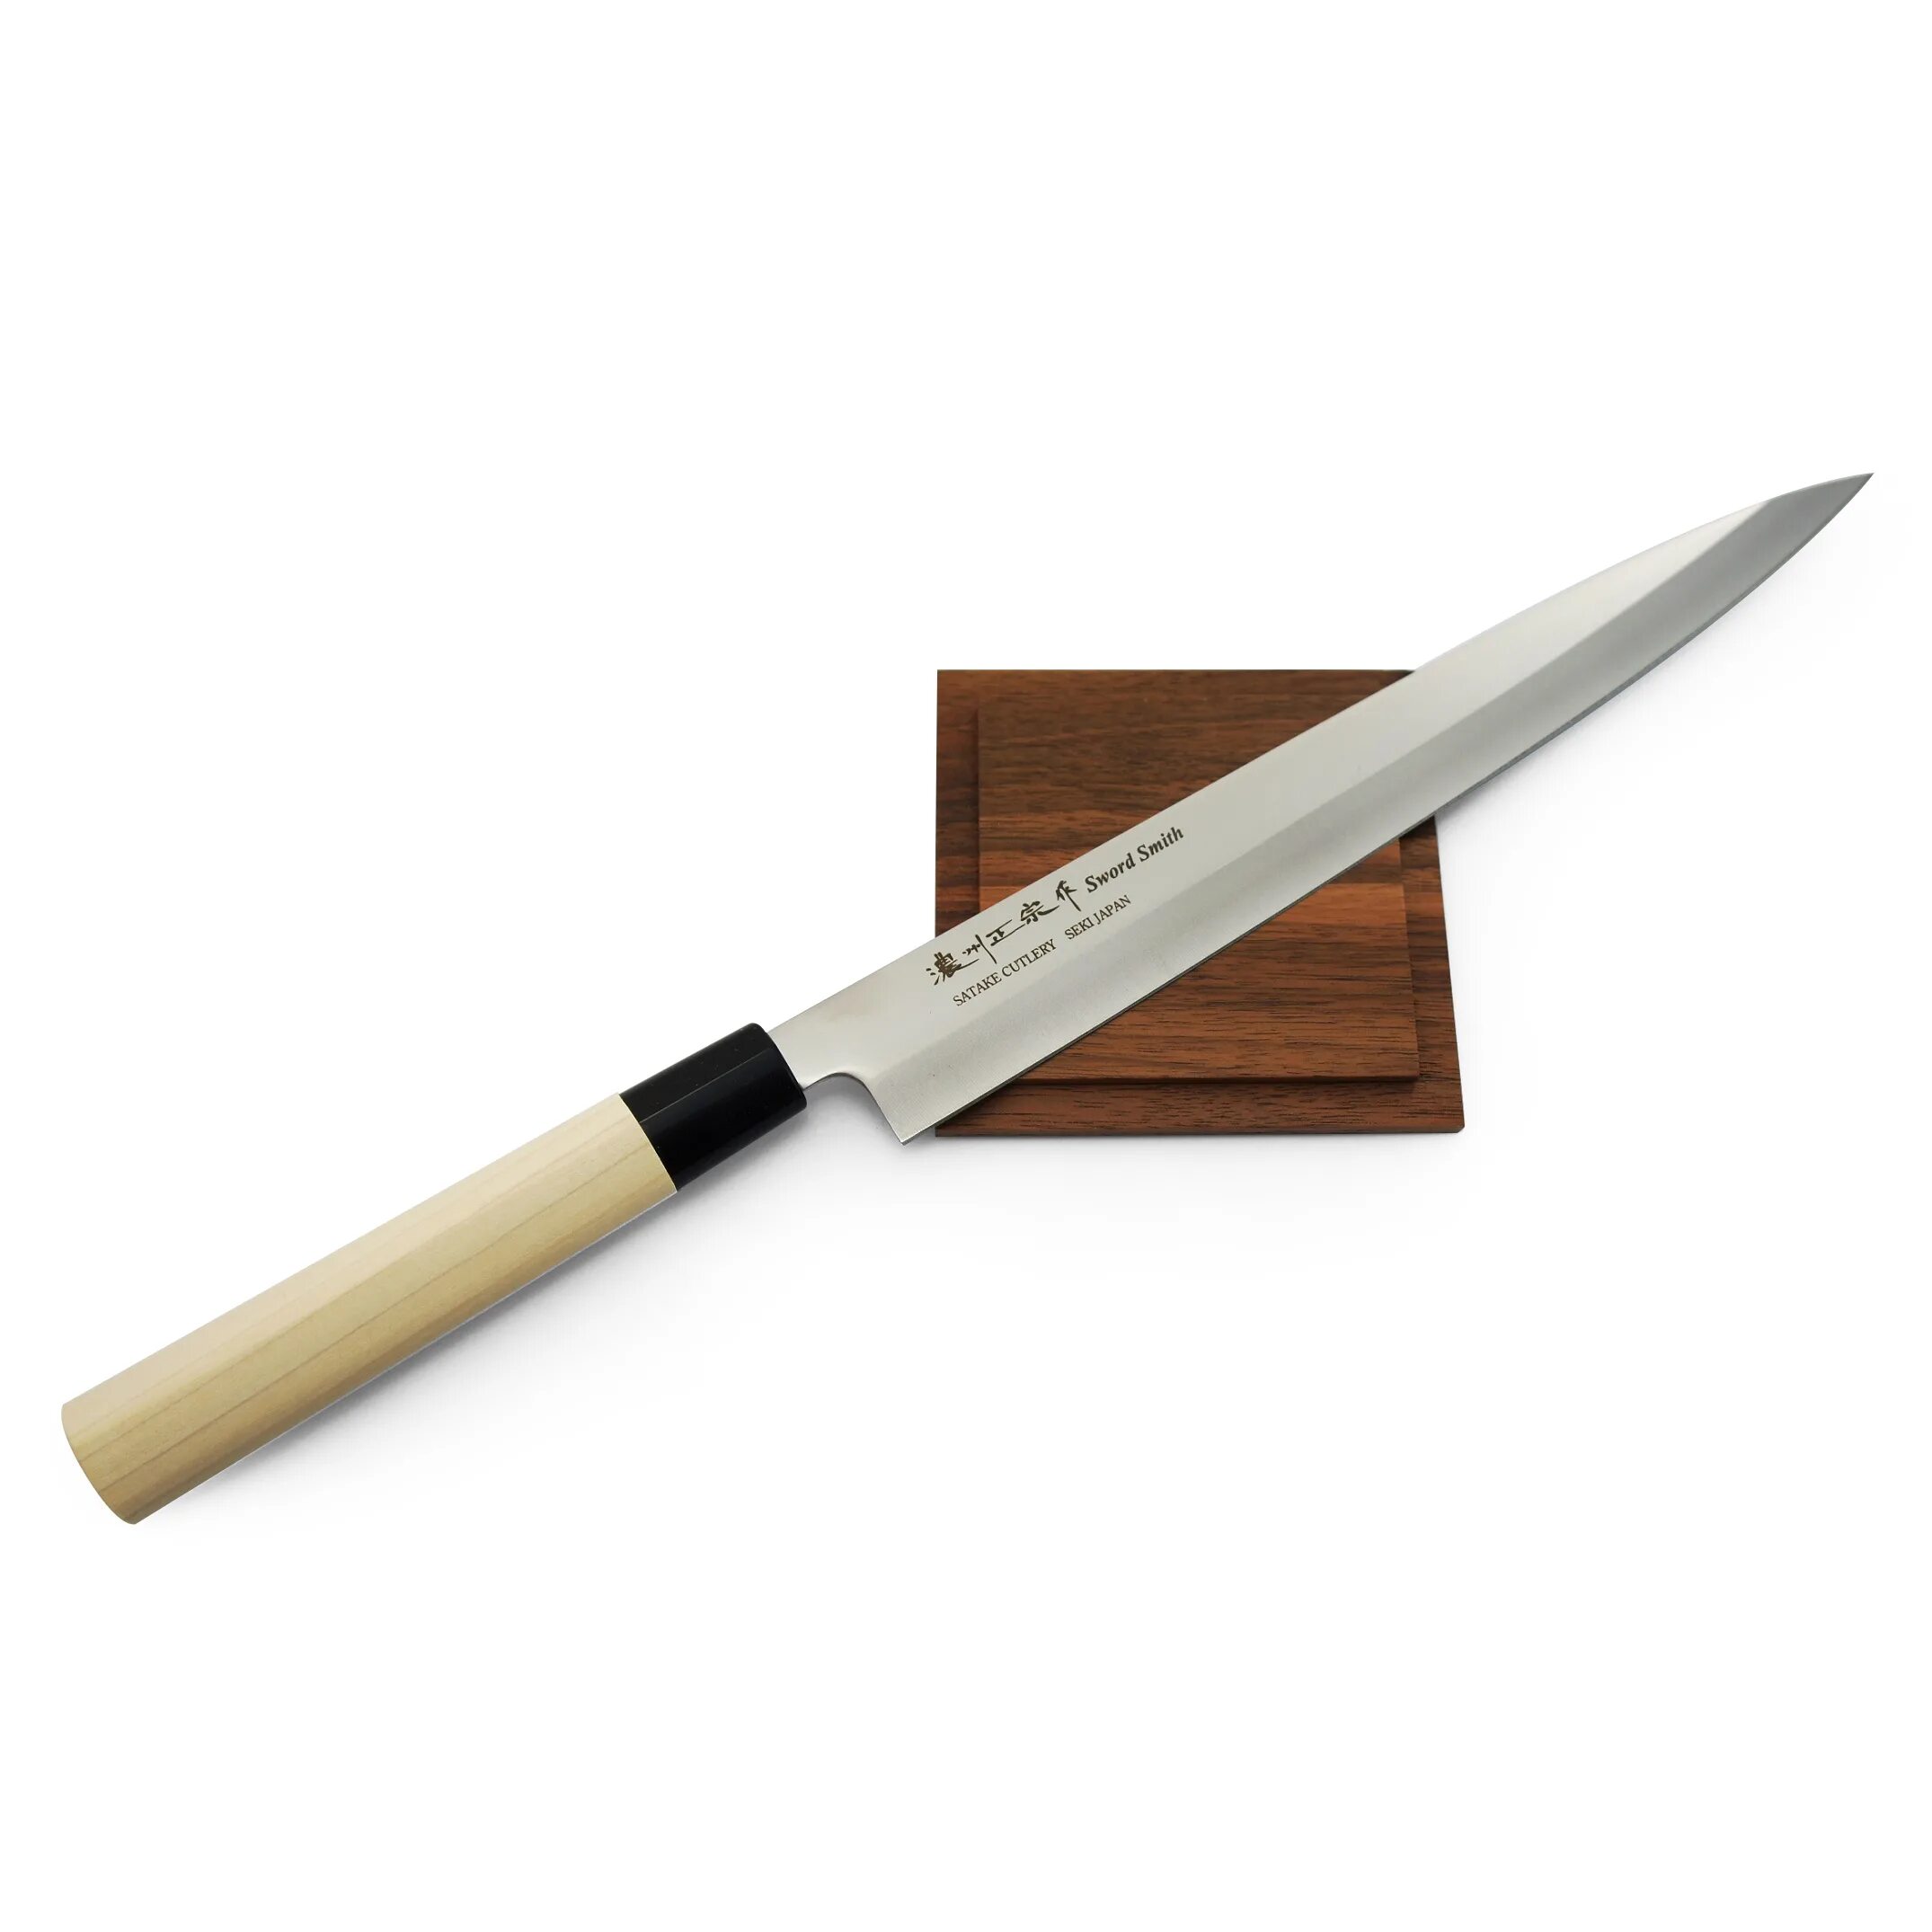 Японский нож Янаги Самура. Нож Янаги для сашими 27 см. Хацуюки нож японский. Нож Satake Sakura.